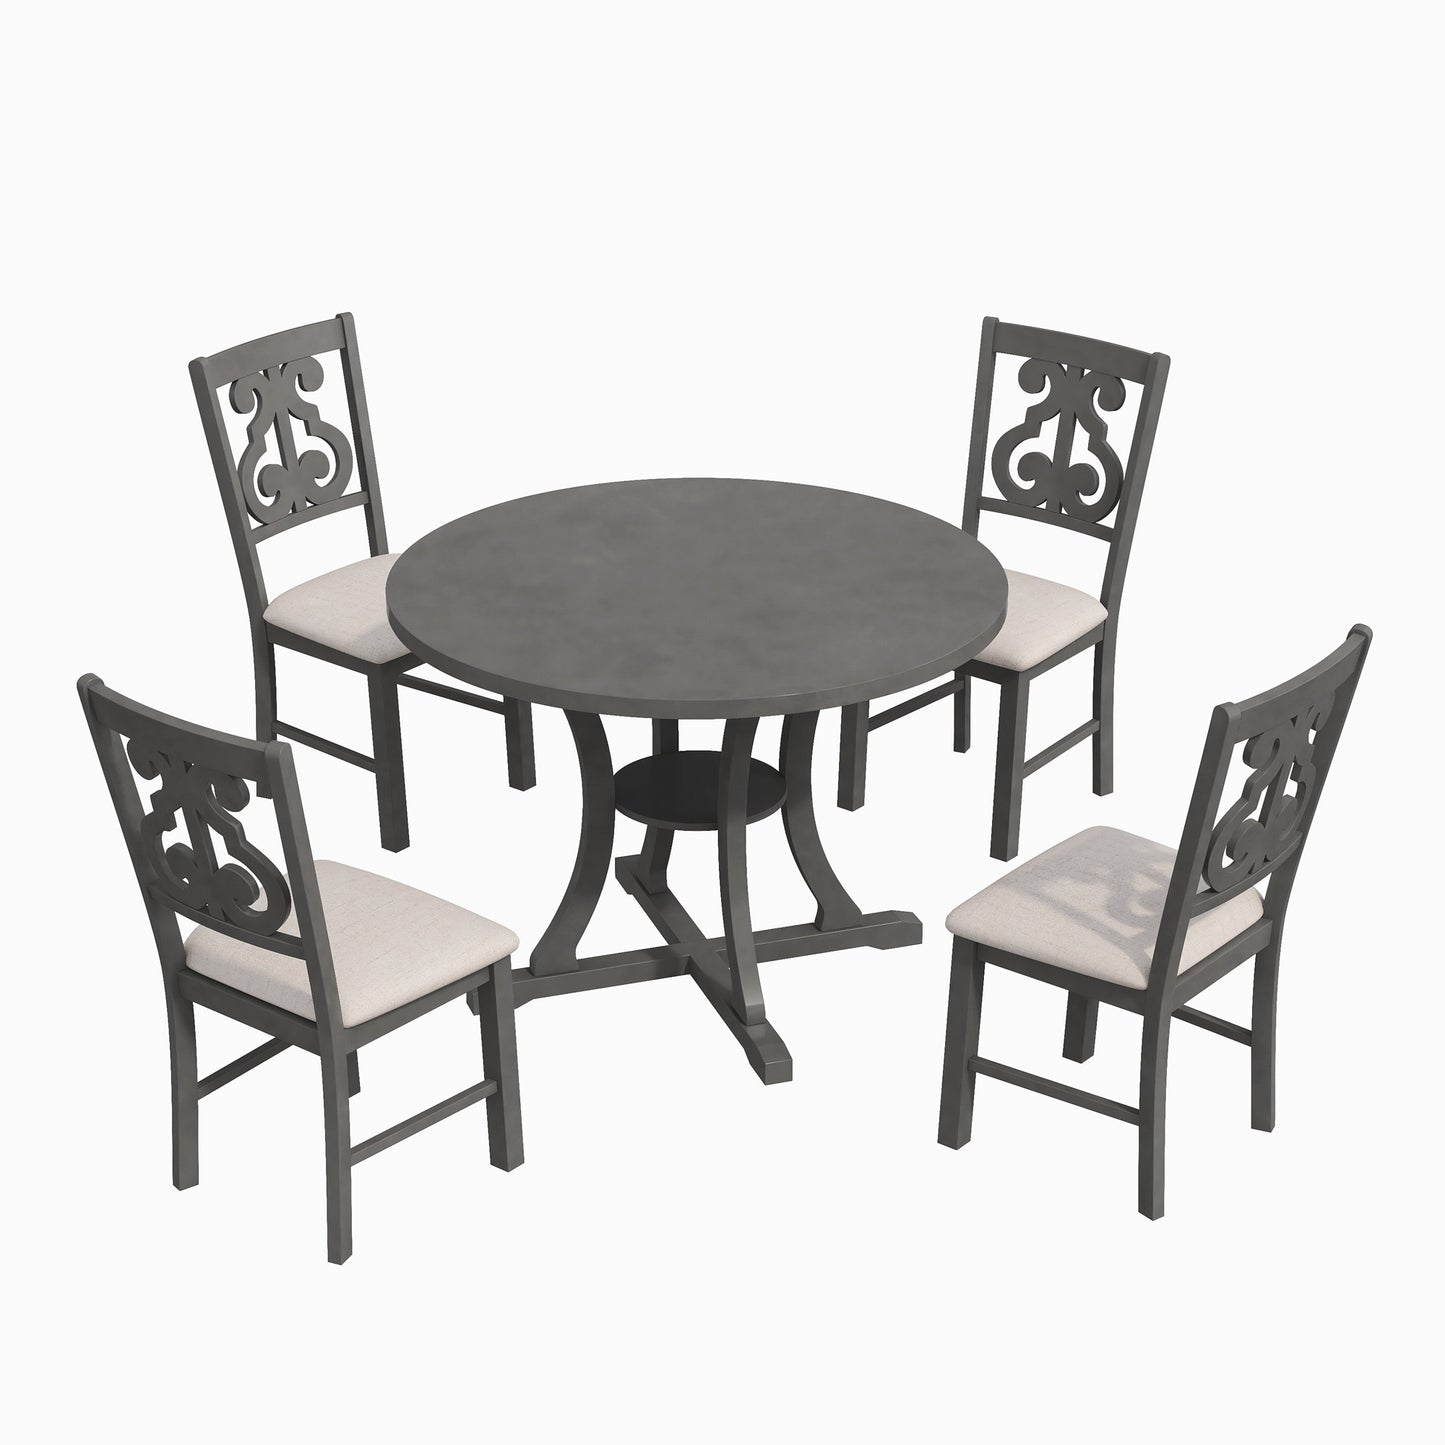 5-piece round dining table set